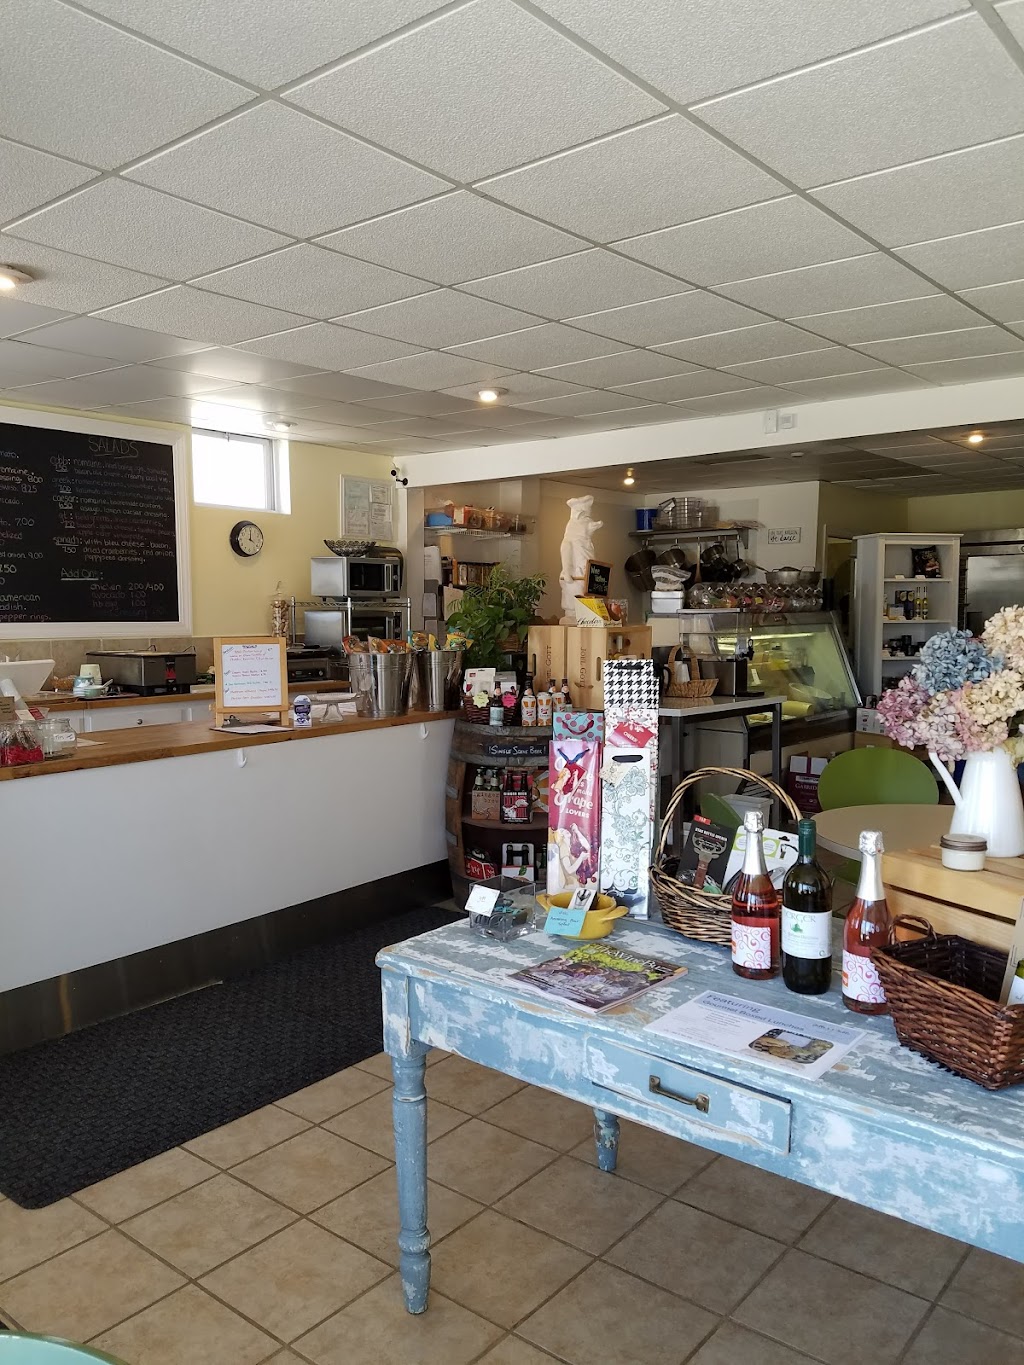 Gittas Table And Wine Shop | 32457 Lake Rd, Avon Lake, OH 44012, USA | Phone: (440) 933-5888